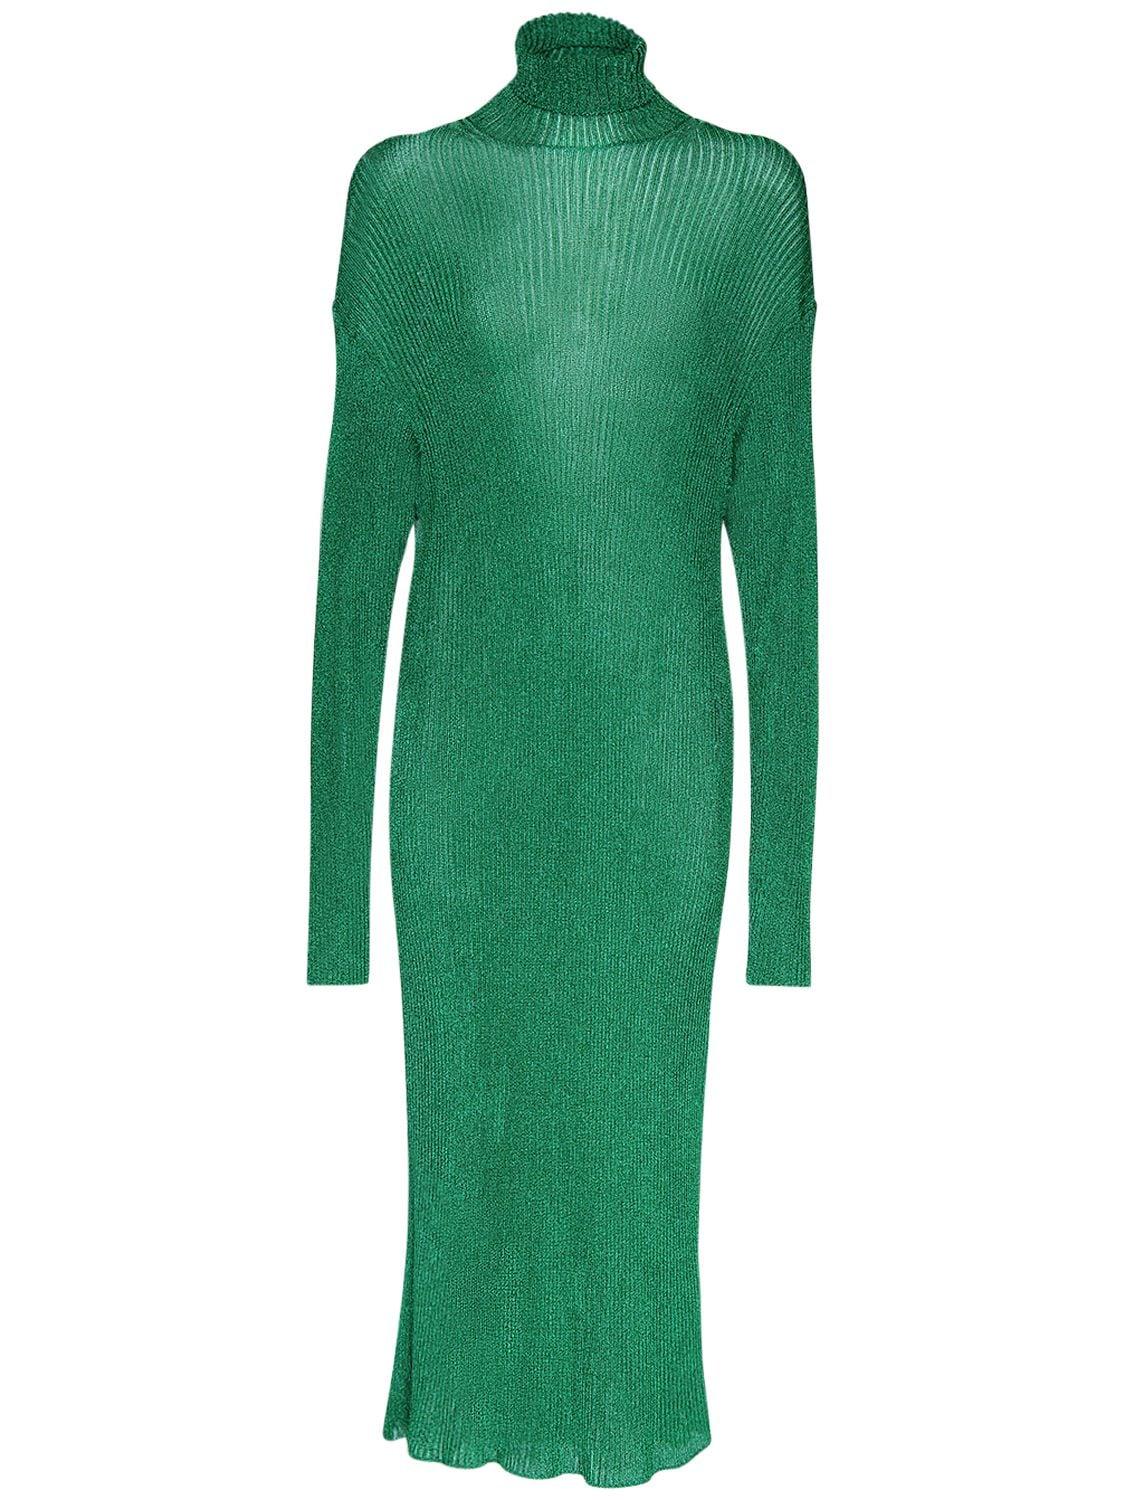 Balenciaga Metallic Knit Rib High Neck Midi Dress in Green | Lyst